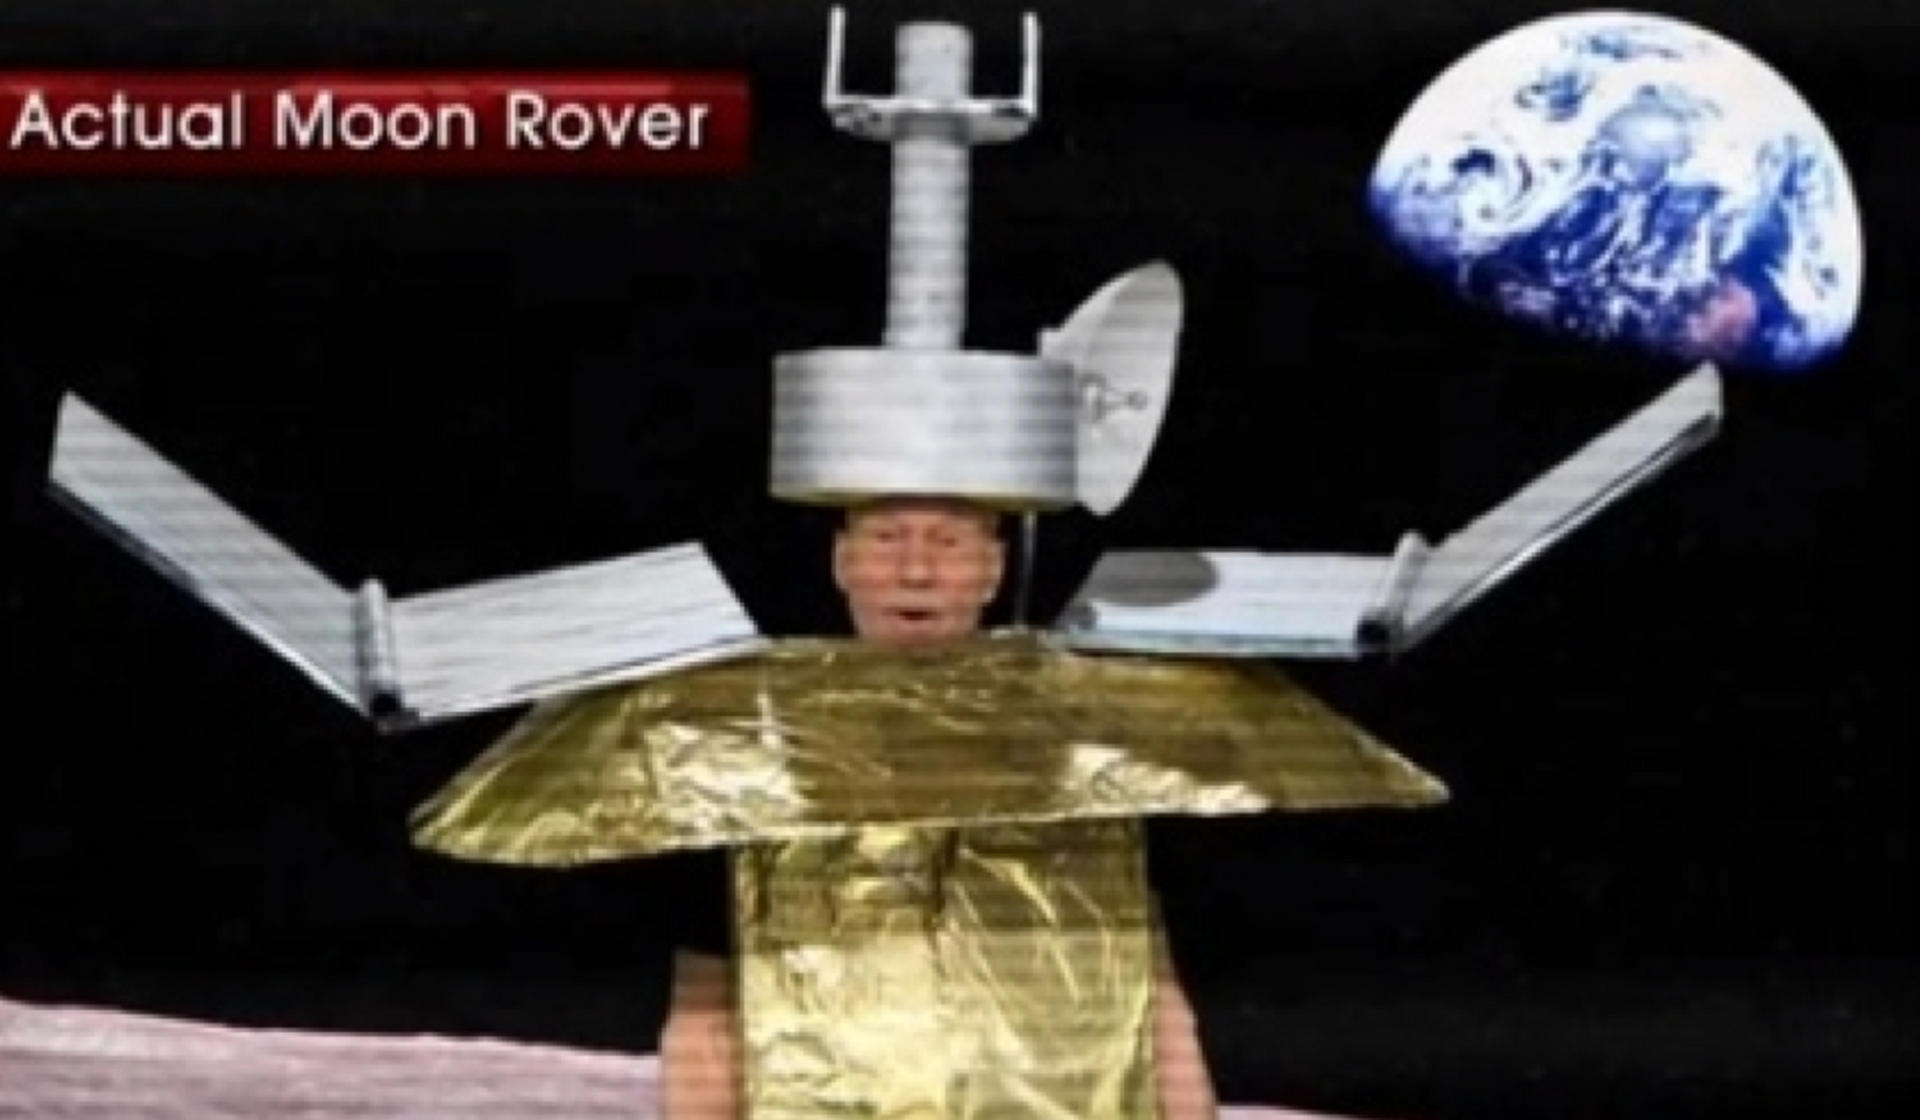 Patrick Stewart as the lunar rover. Photo: SCMP